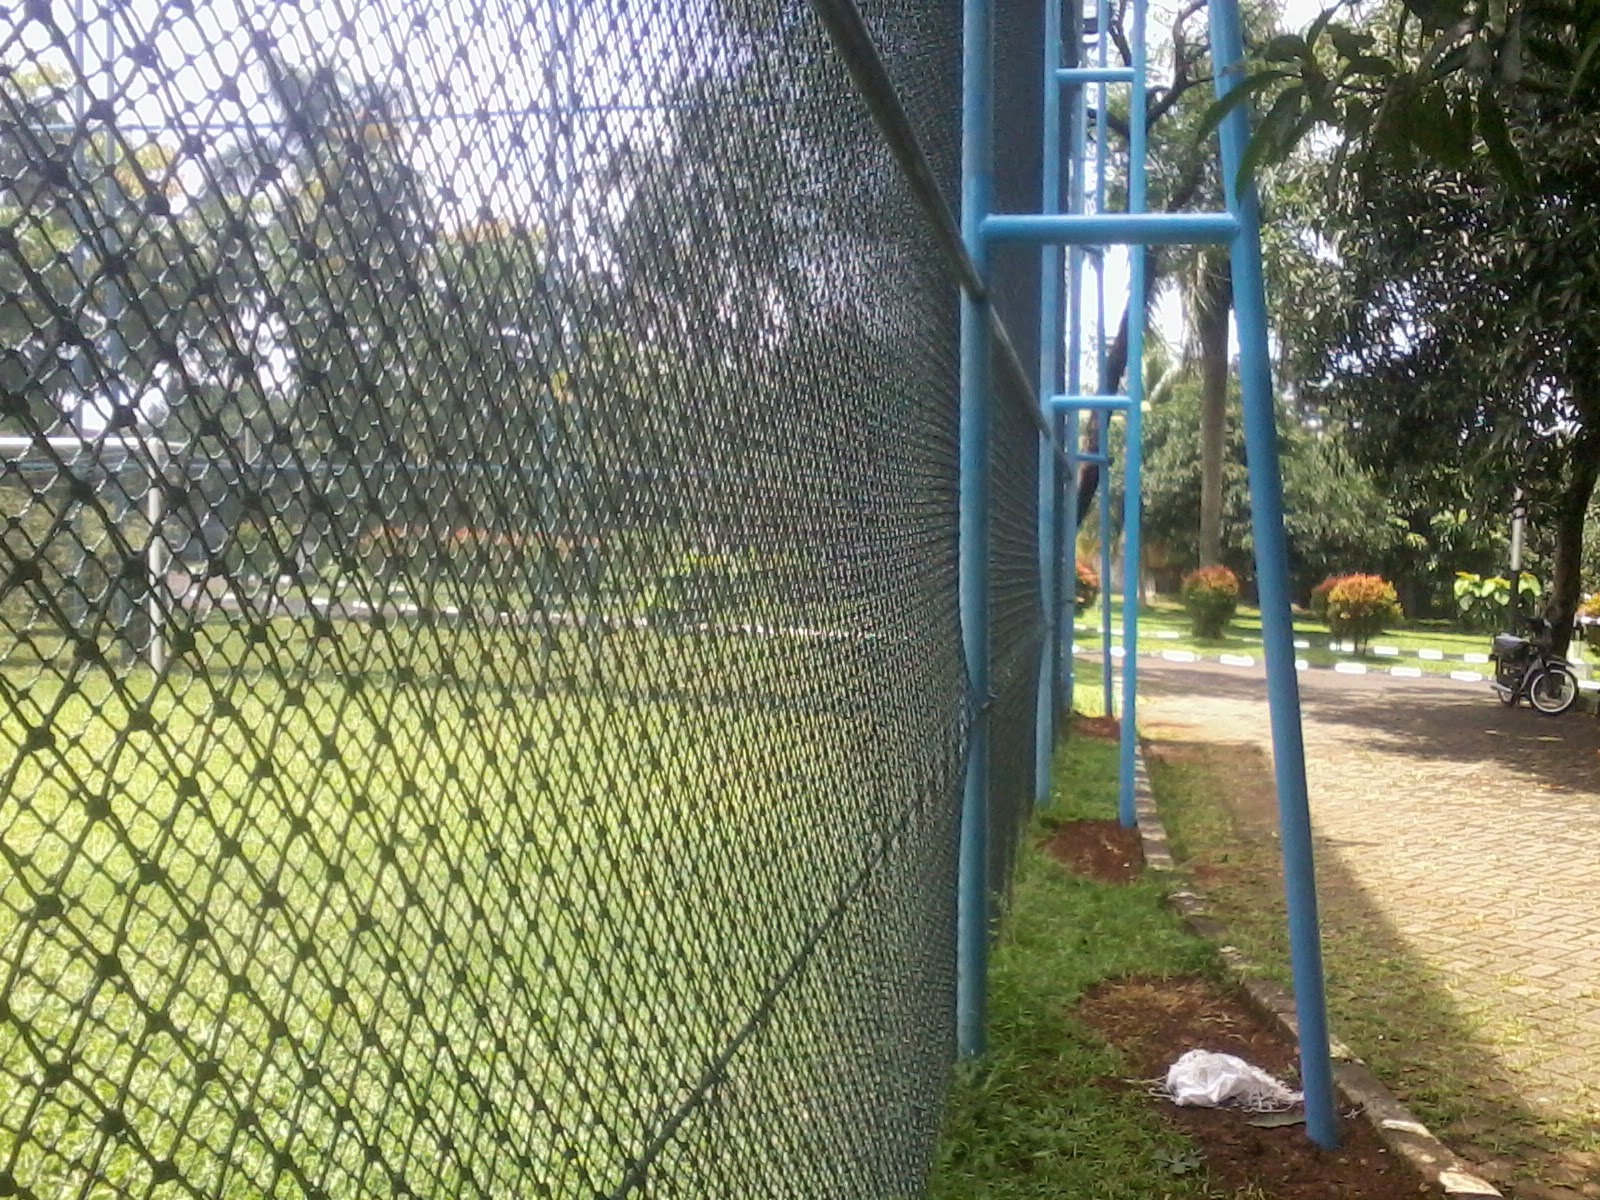 Agen Lapangan Futsal Specialis pemasangan pagar jaring 